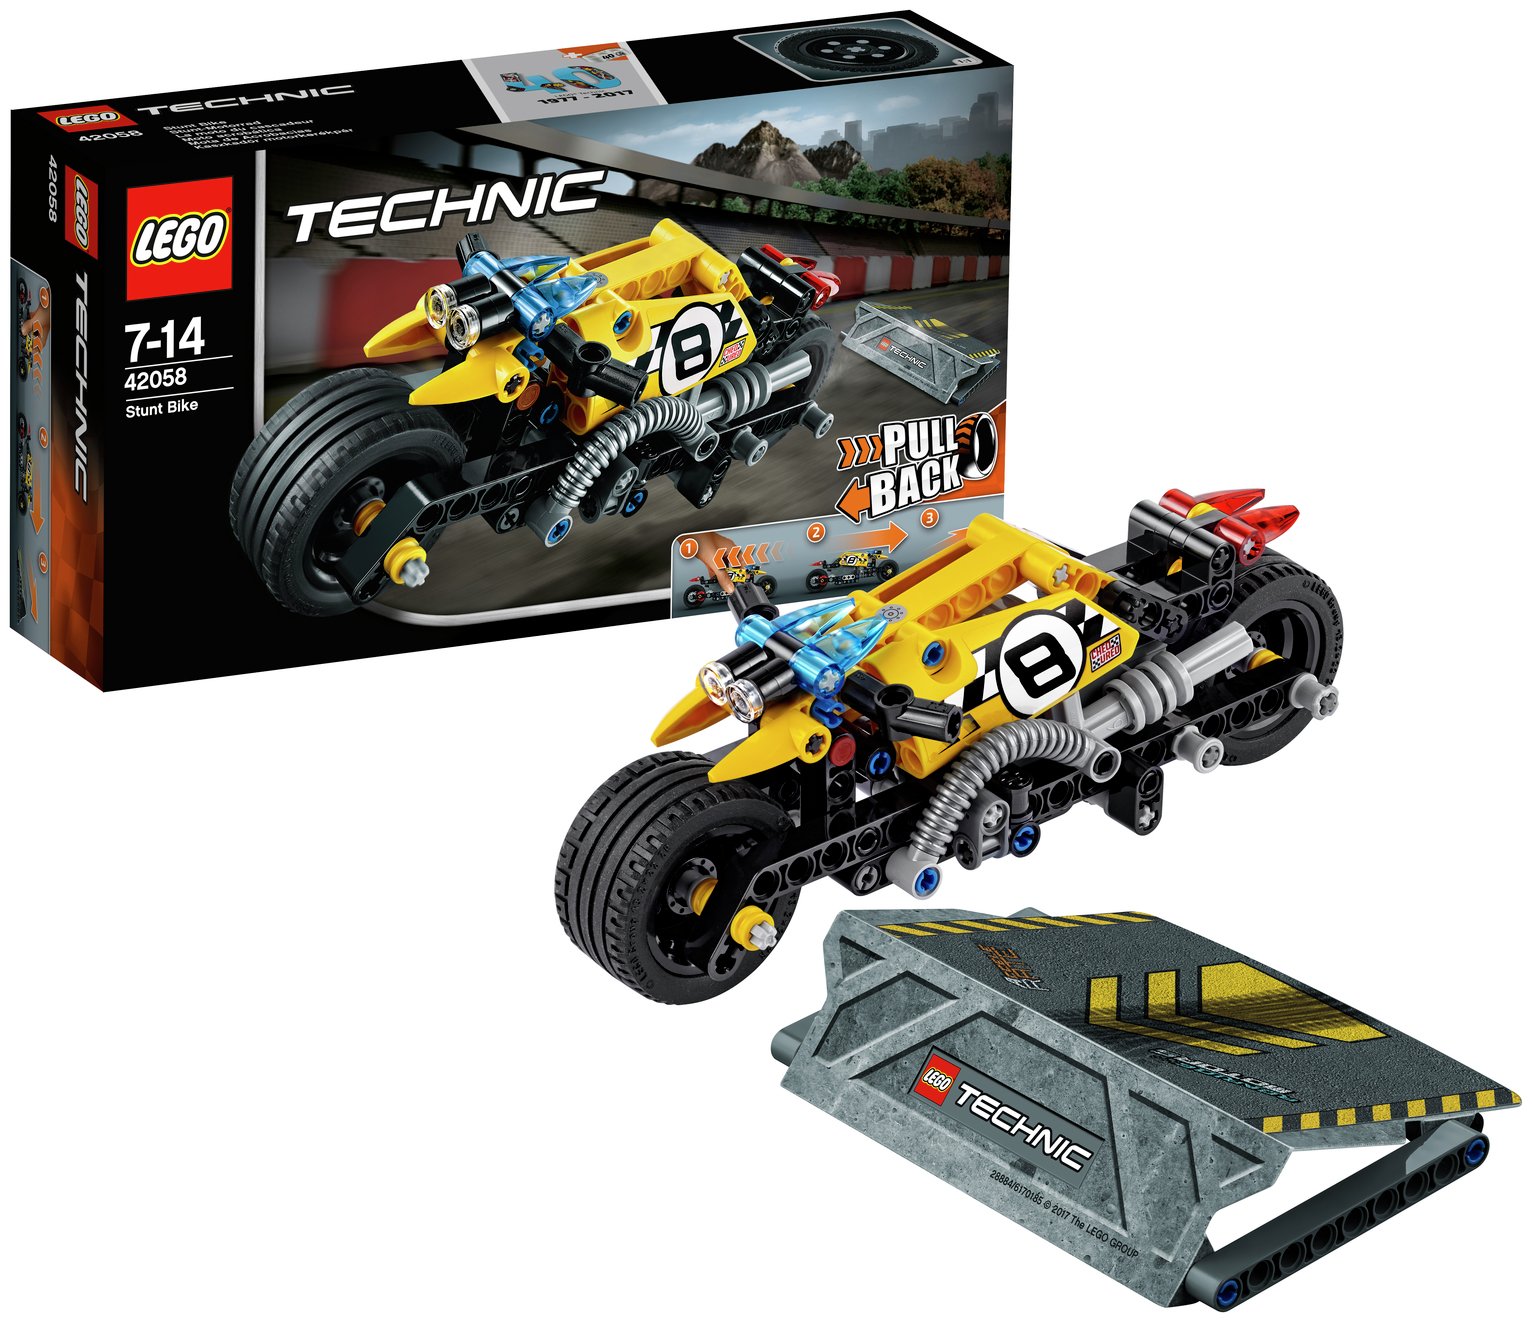 LEGO Technic Stunt Bike - 42058